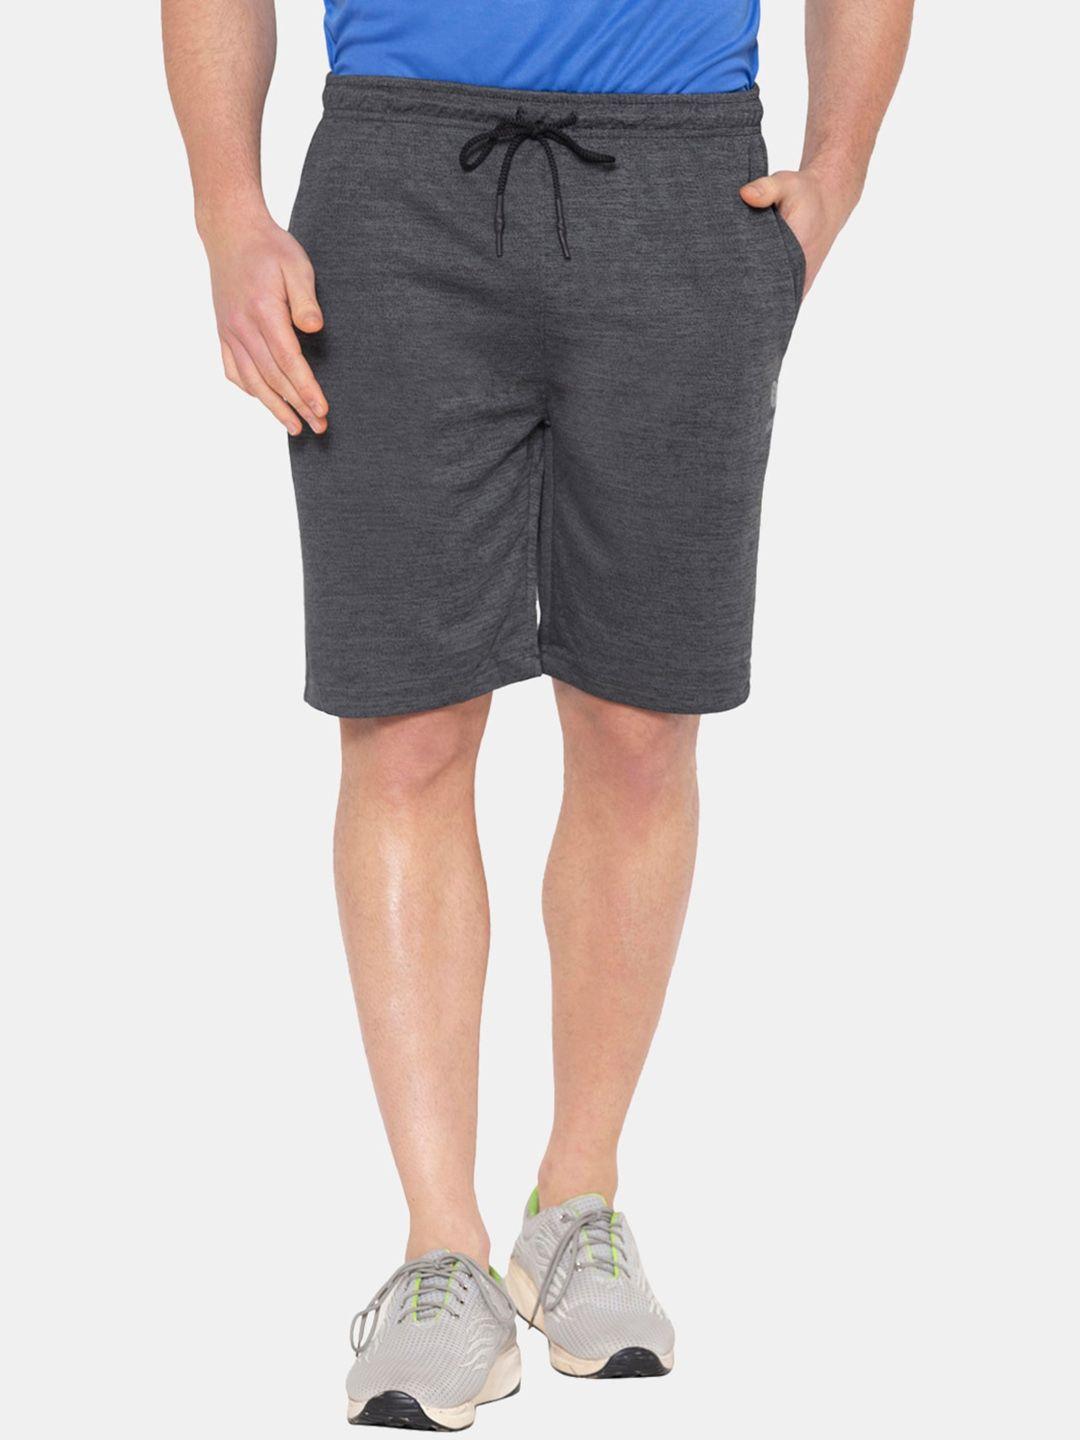 bodyactive men mid-rise cotton running shorts